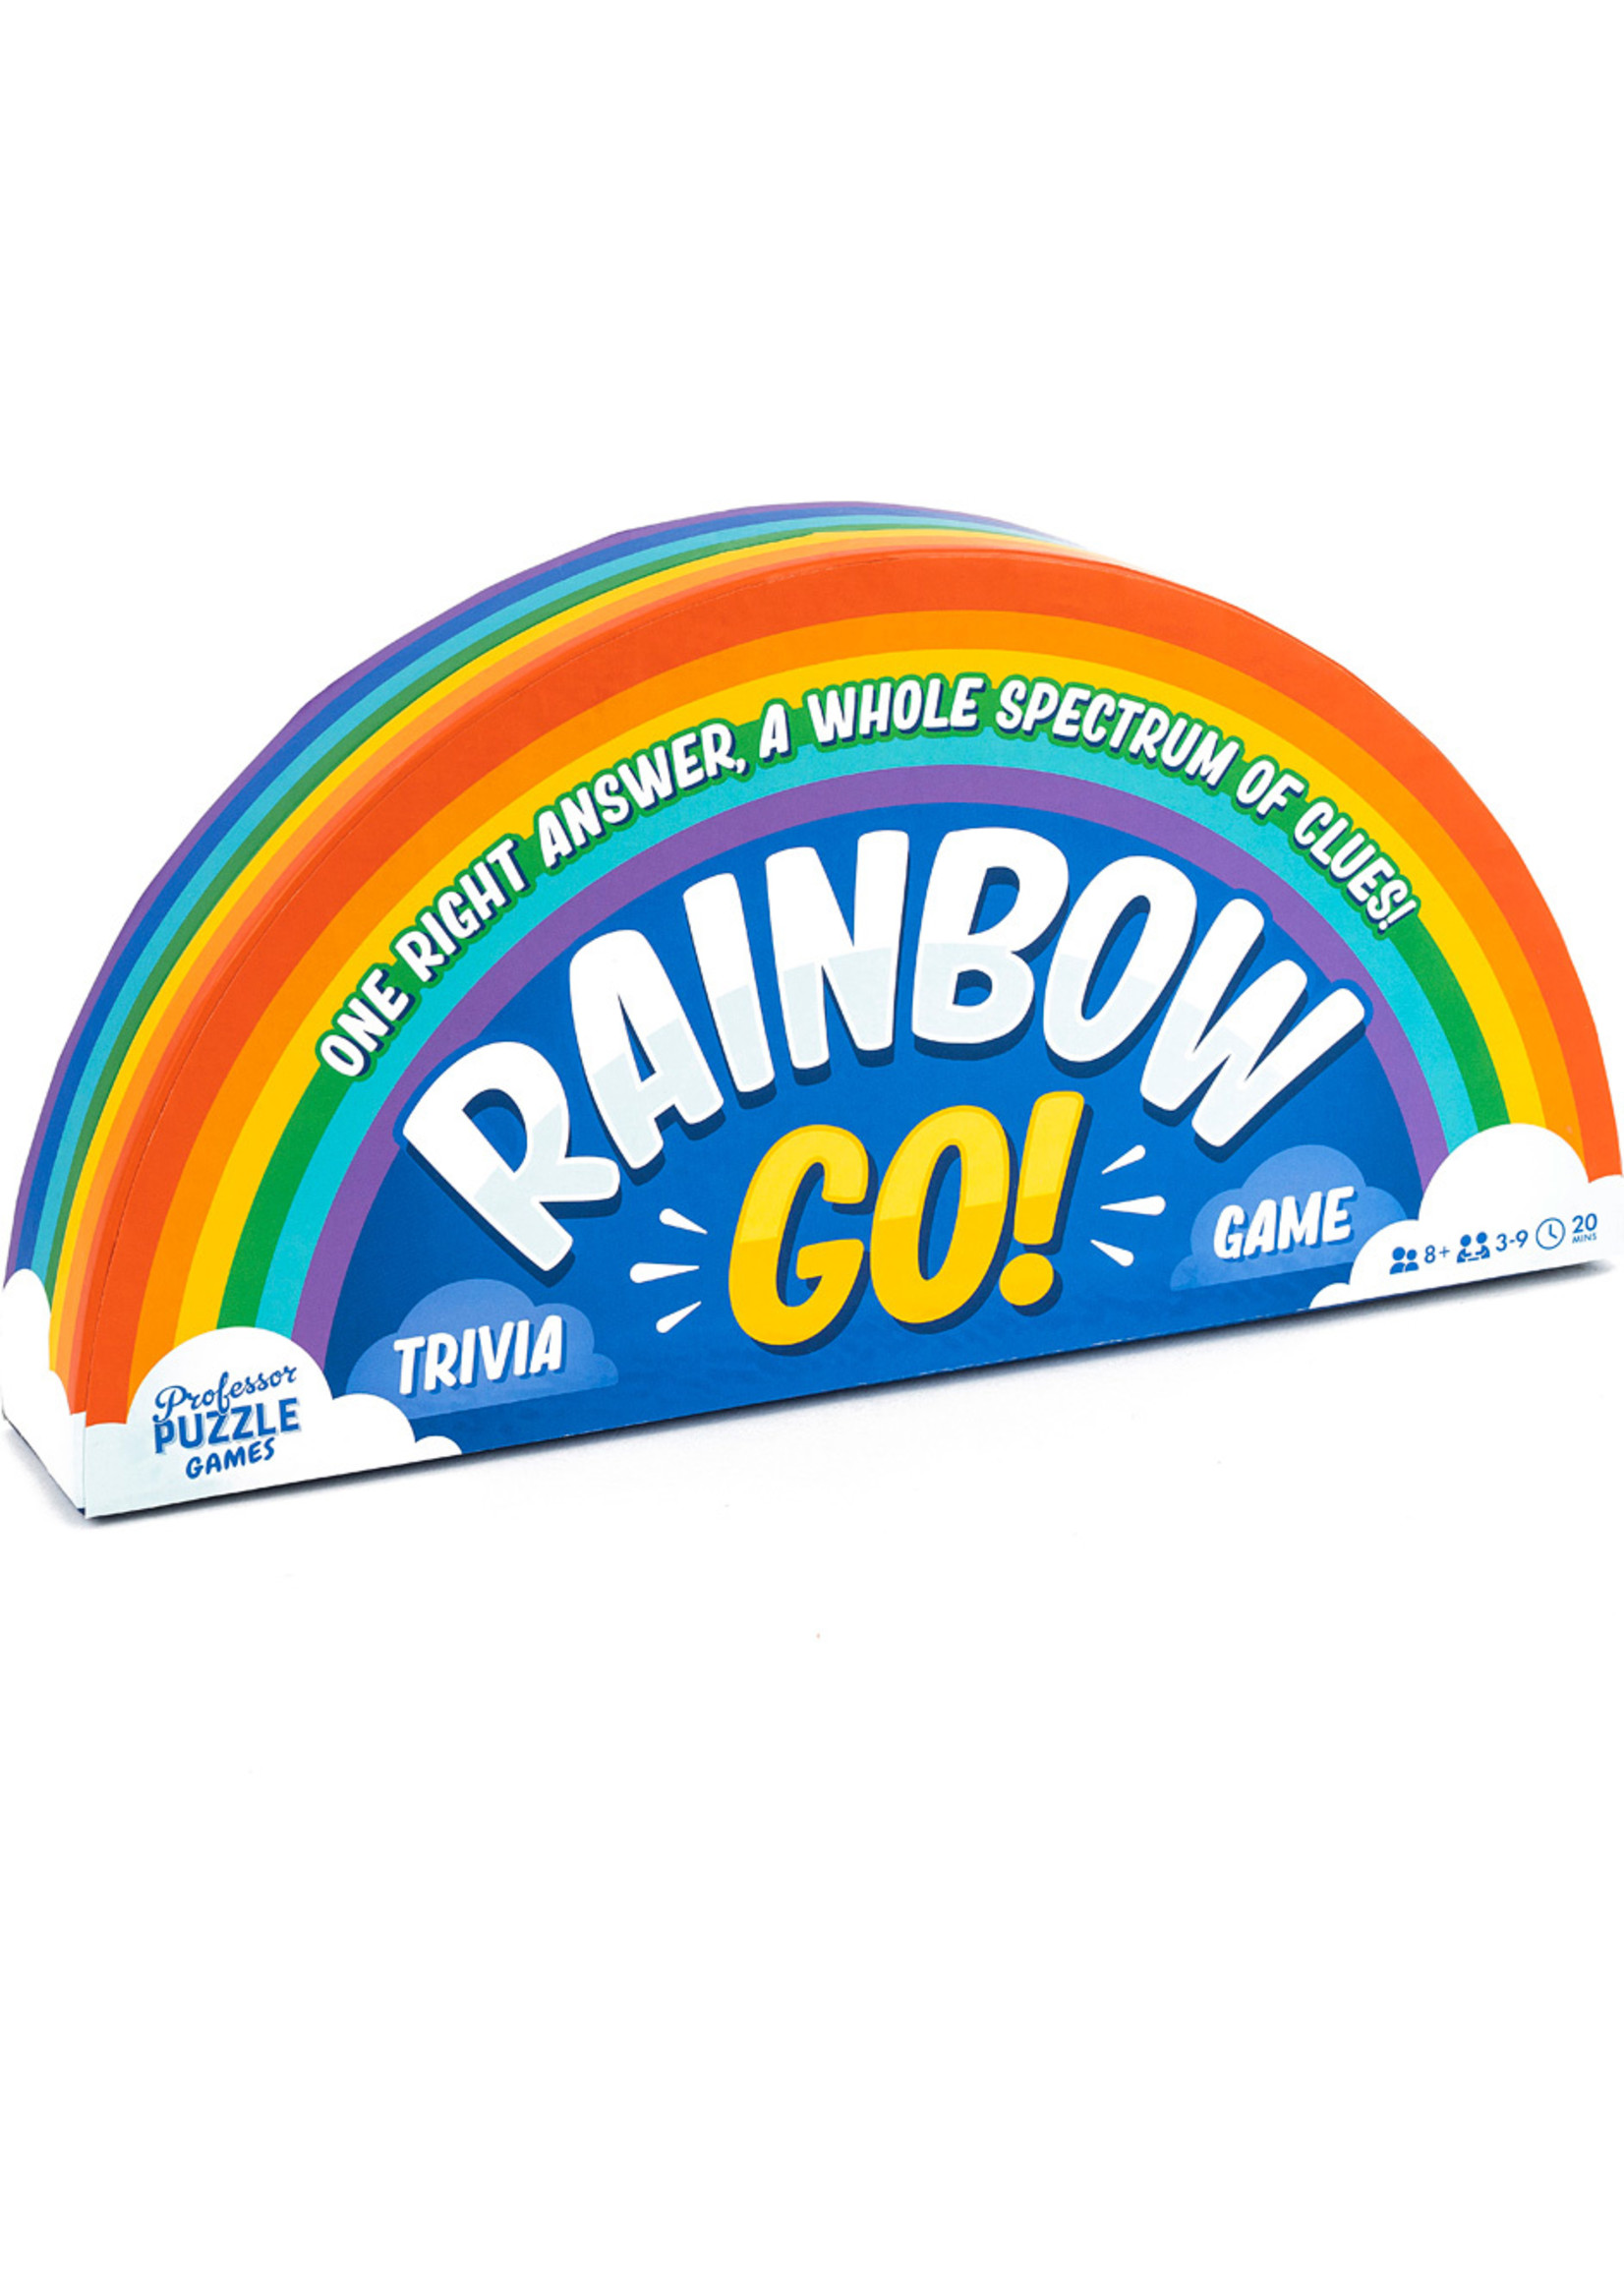 Professor Puzzle Rainbow Go!